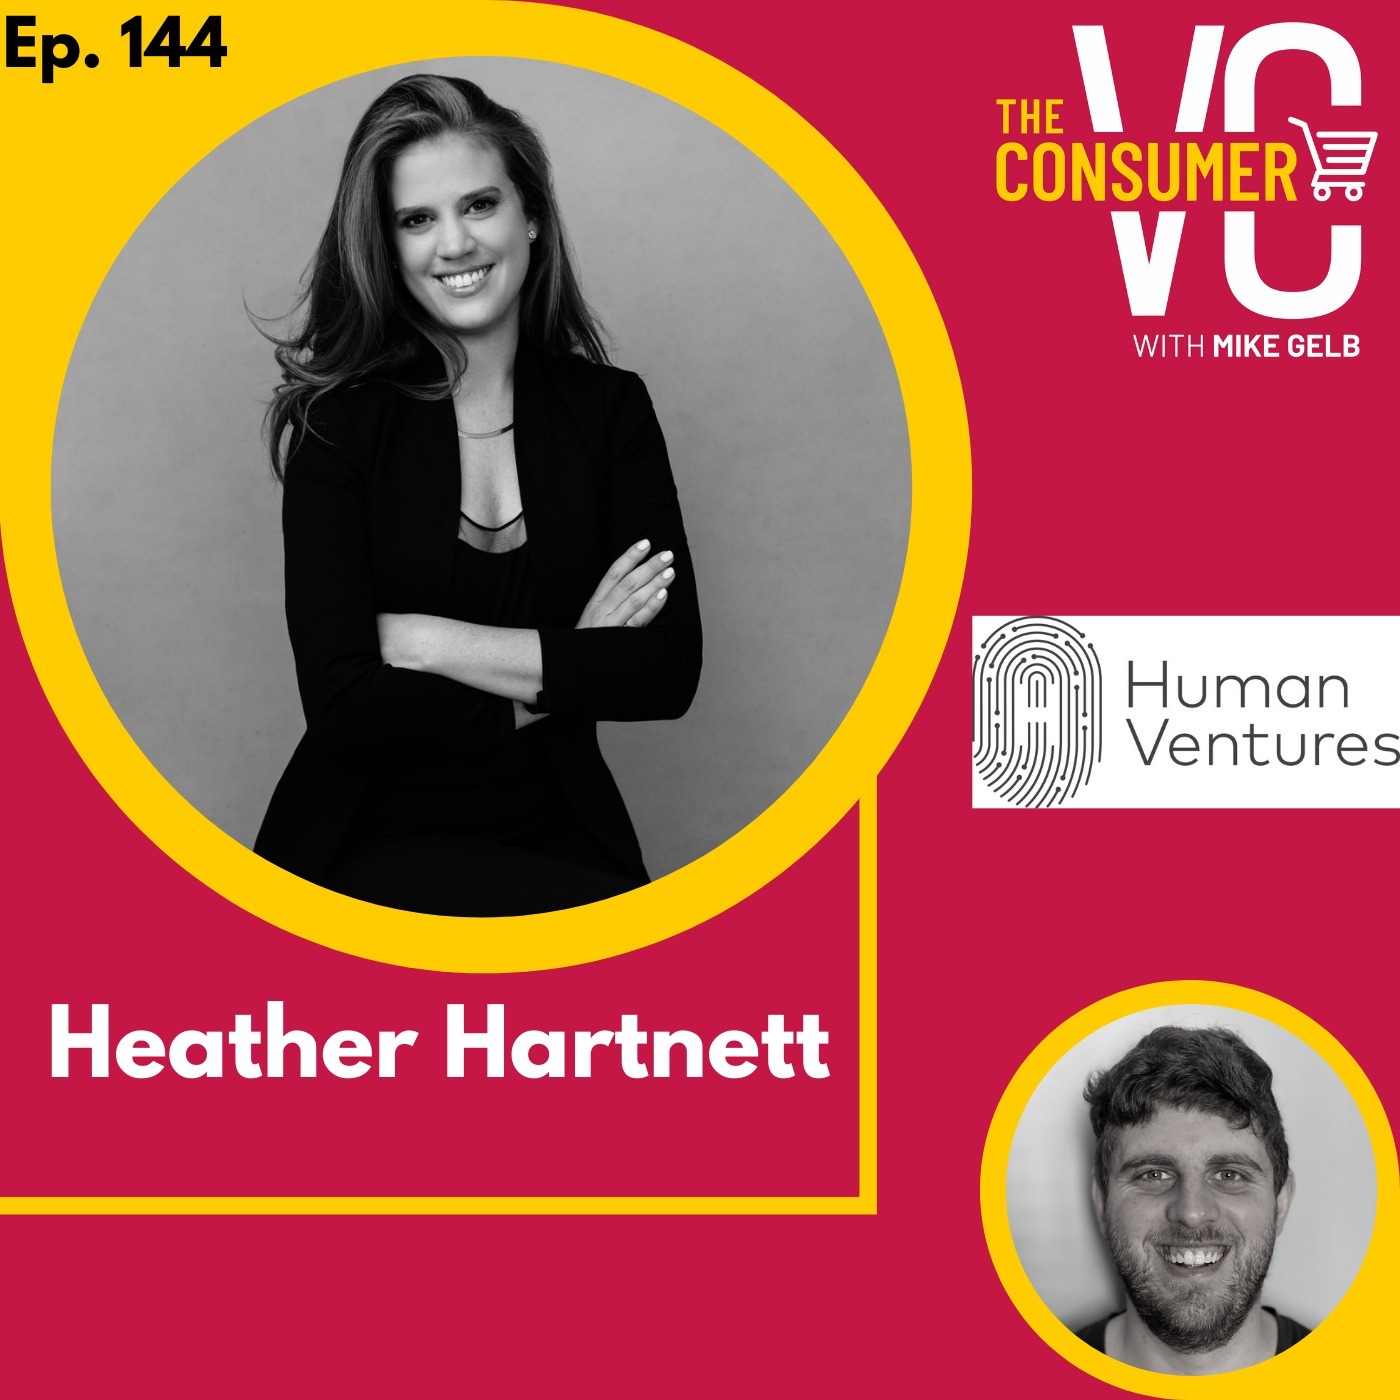 Heather Hartnett (Human Ventures) - The Human Needs Economy